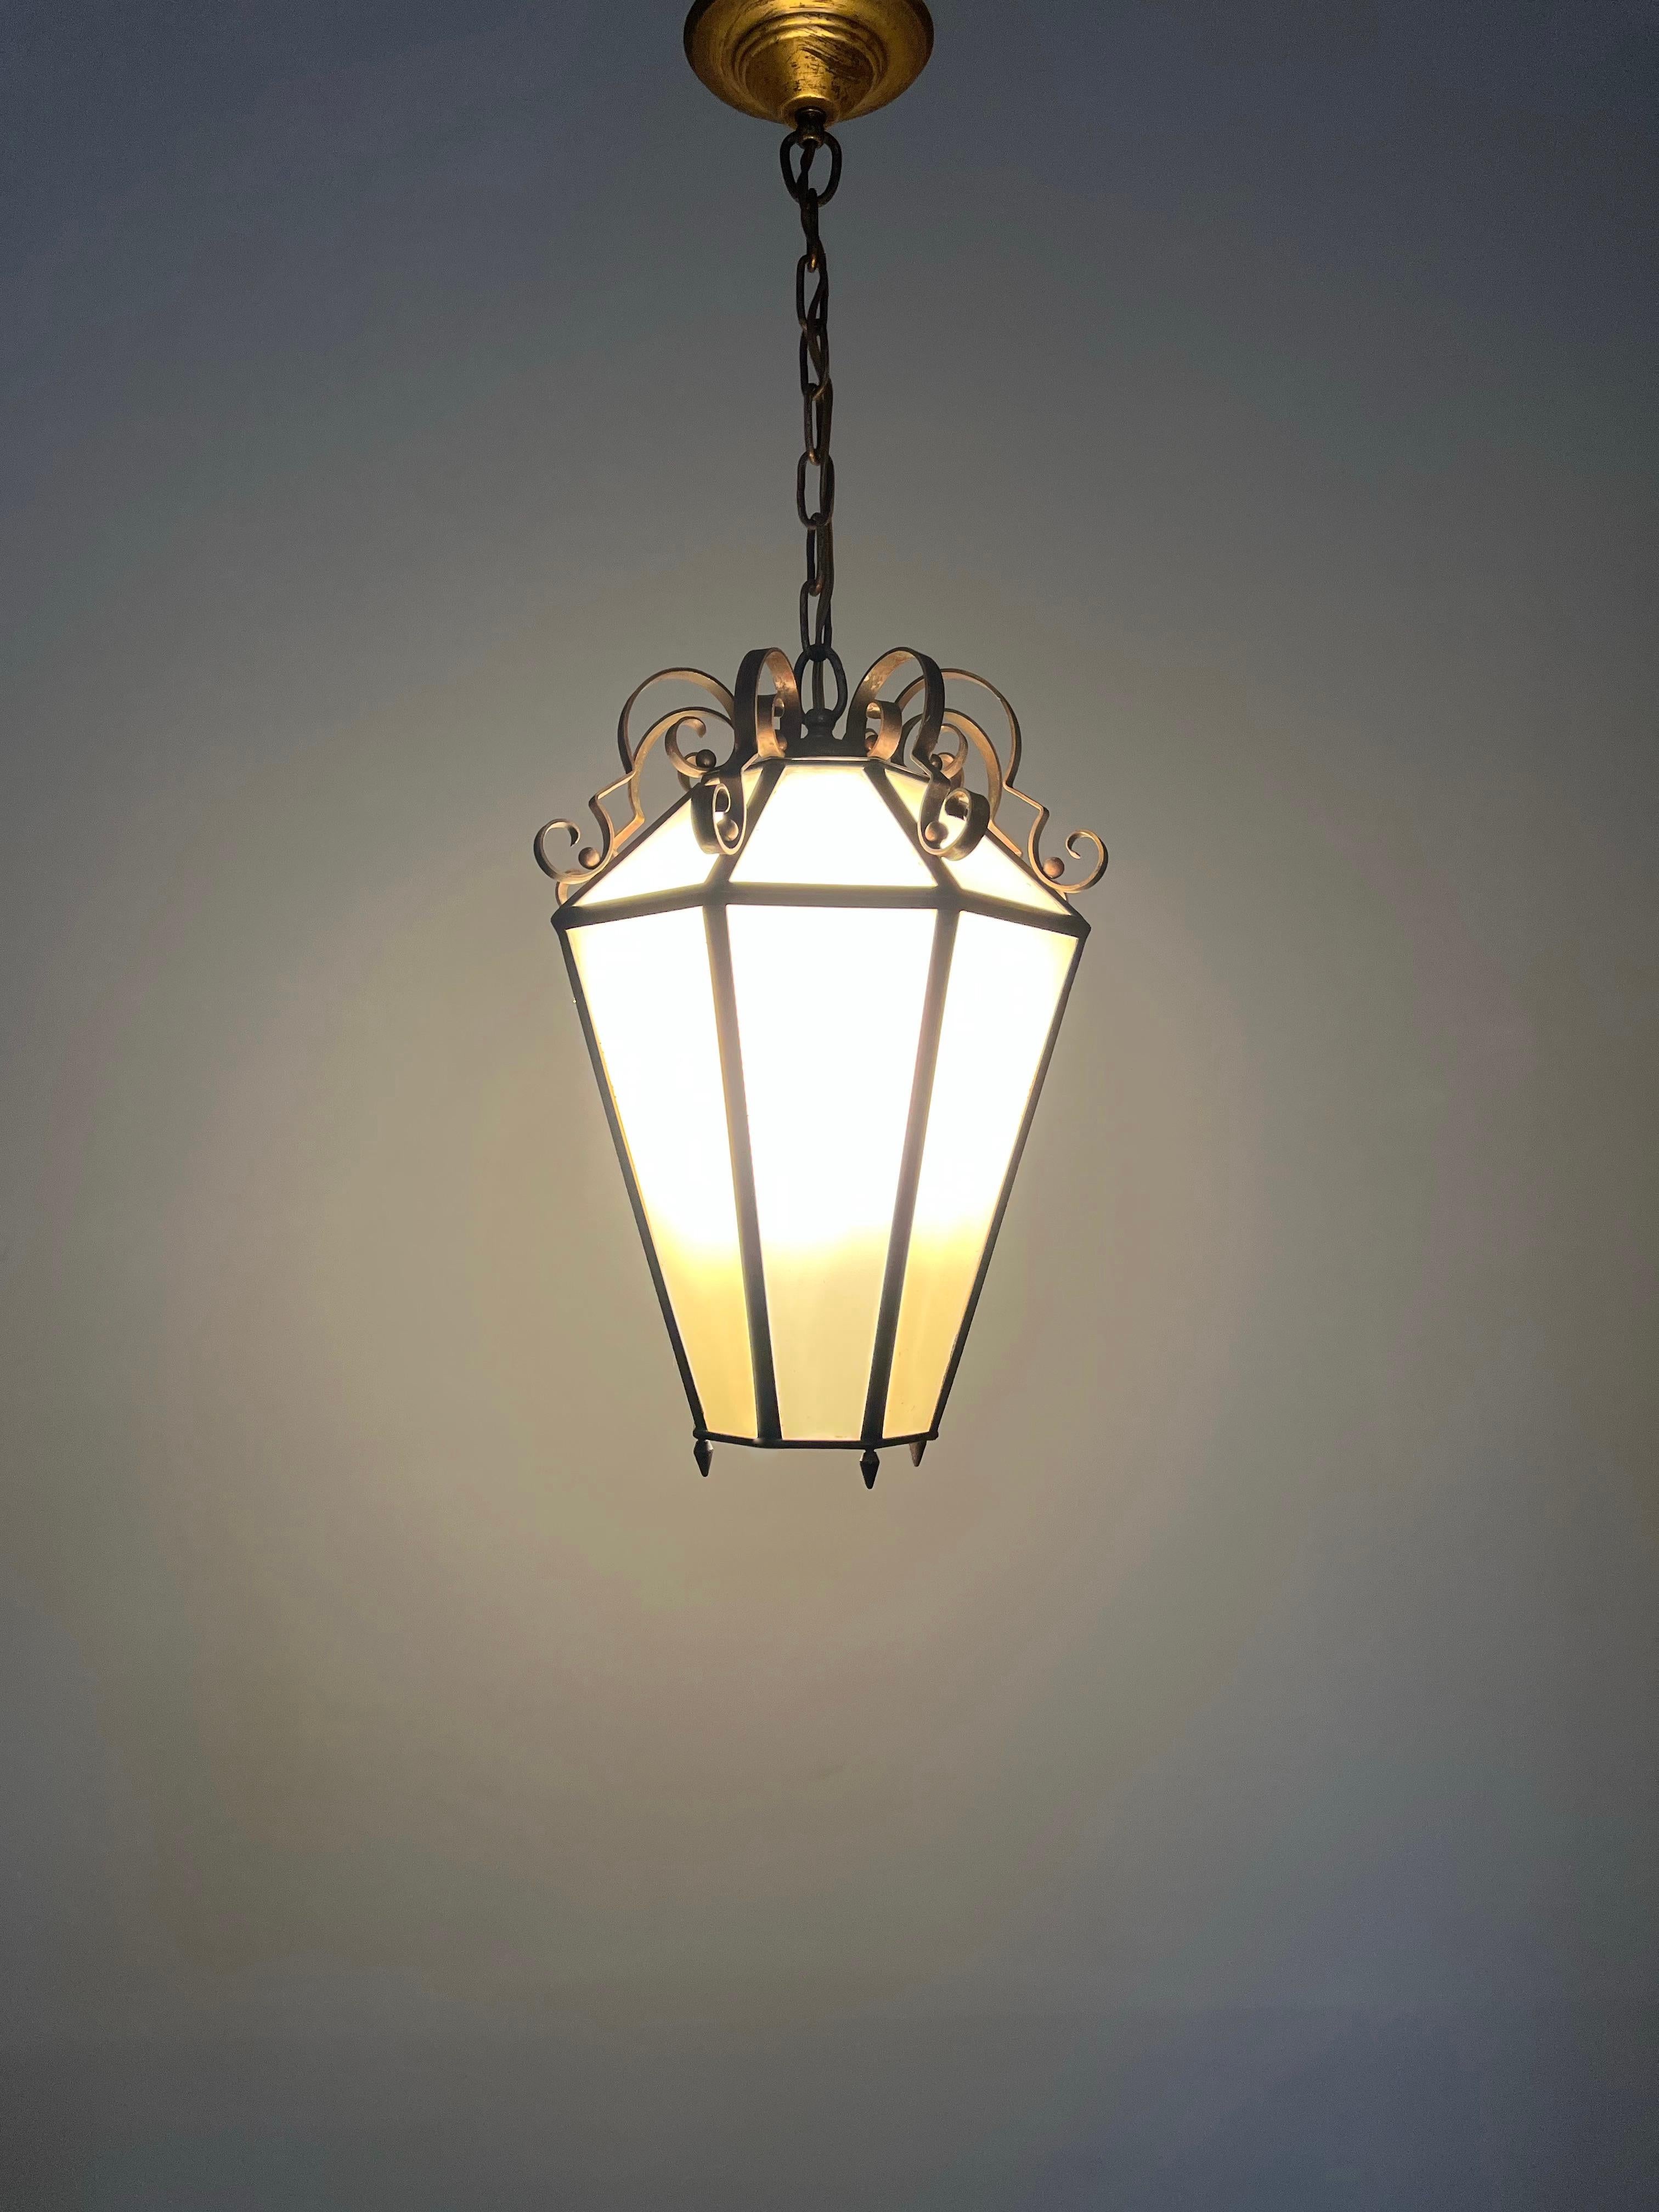 Art Deco Brass and Italian Glass Octagonal Design Pendant Light / Hall Lantern For Sale 8